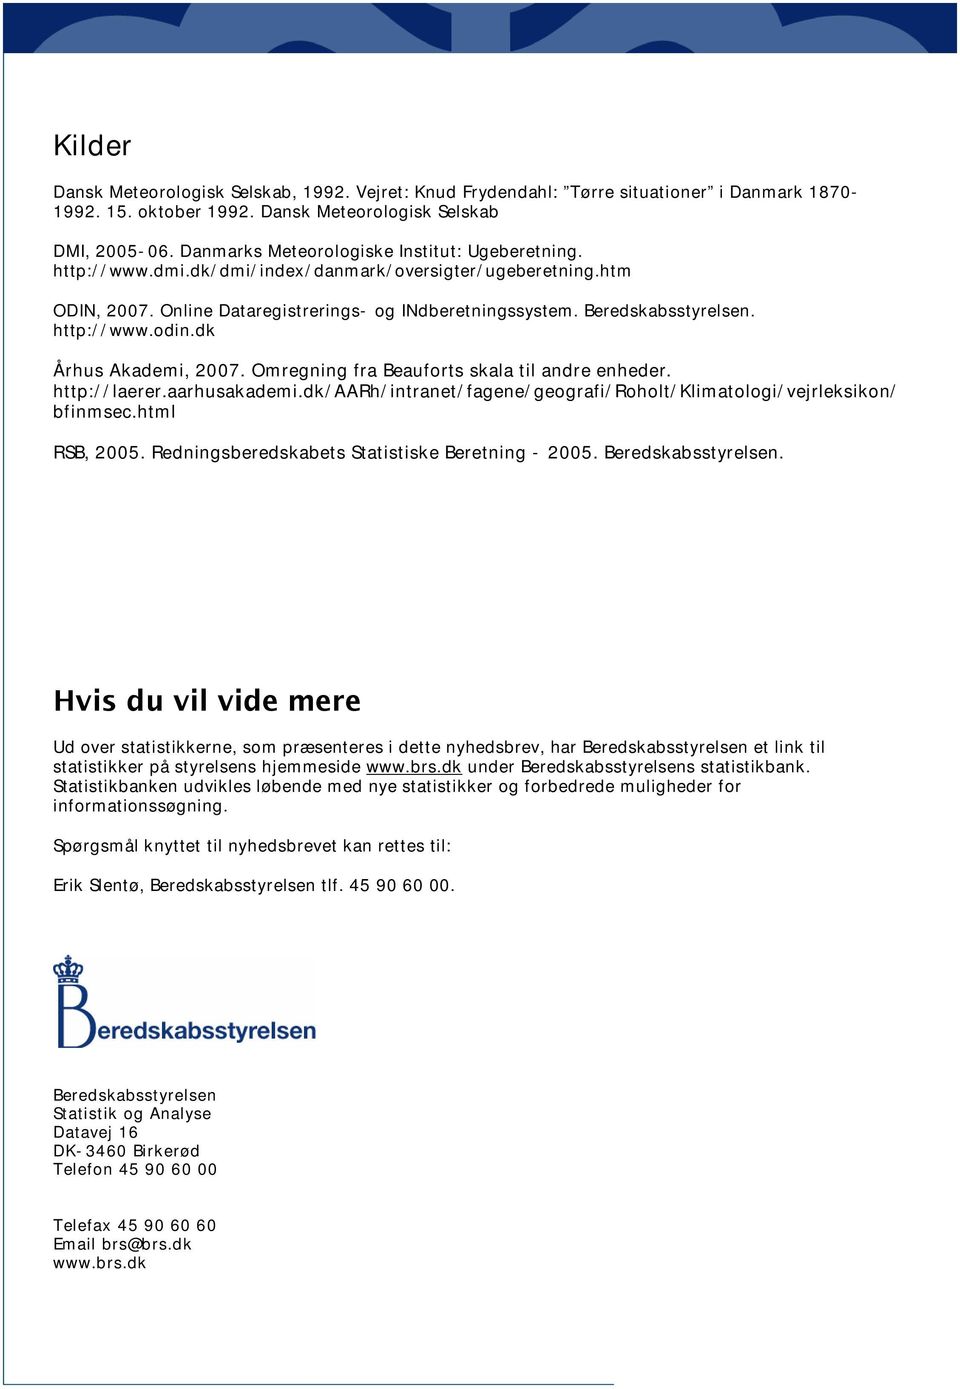 http://www.odin.dk Århus Akademi, 27. Omregning fra Beauforts skala til andre enheder. http://laerer.aarhusakademi.dk/aarh/intranet/fagene/geografi/roholt/klimatologi/vejrleksikon/ bfinmsec.